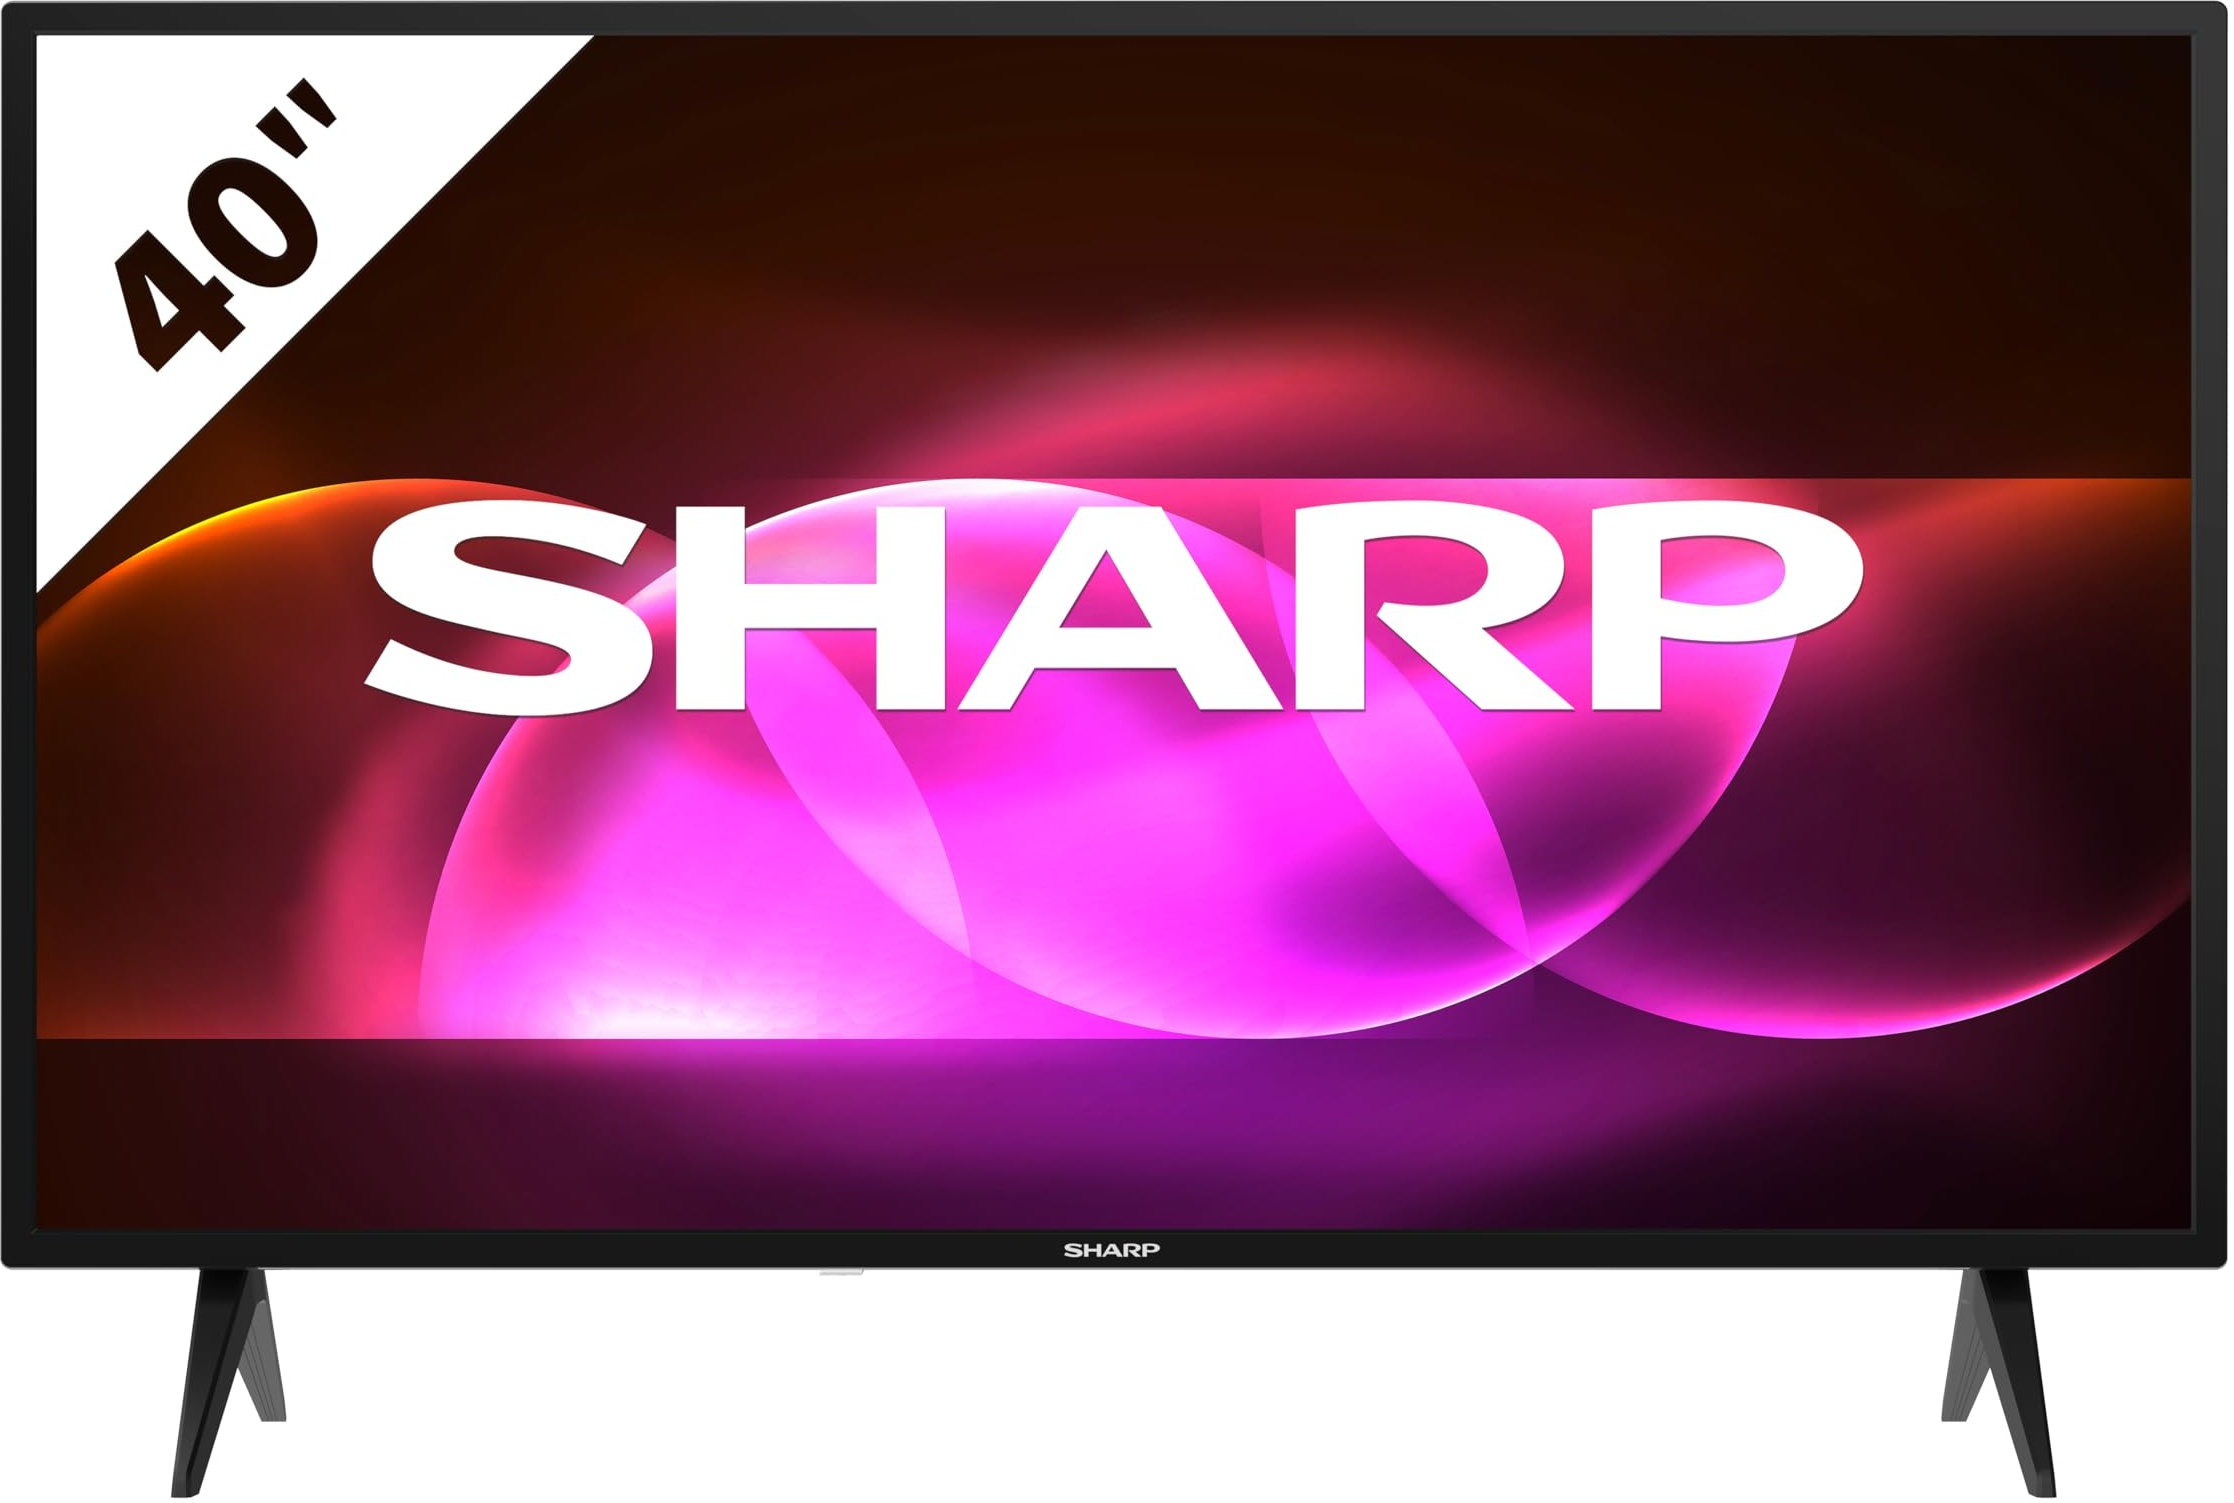 SHARP 40FA6E Full HD LED Fernseher 101 cm (40 Zoll), 3X HDMI, 2X USB, VB-T/T2/C/S/S2 (MPEG4 + HEVC/H.265, Schwarz